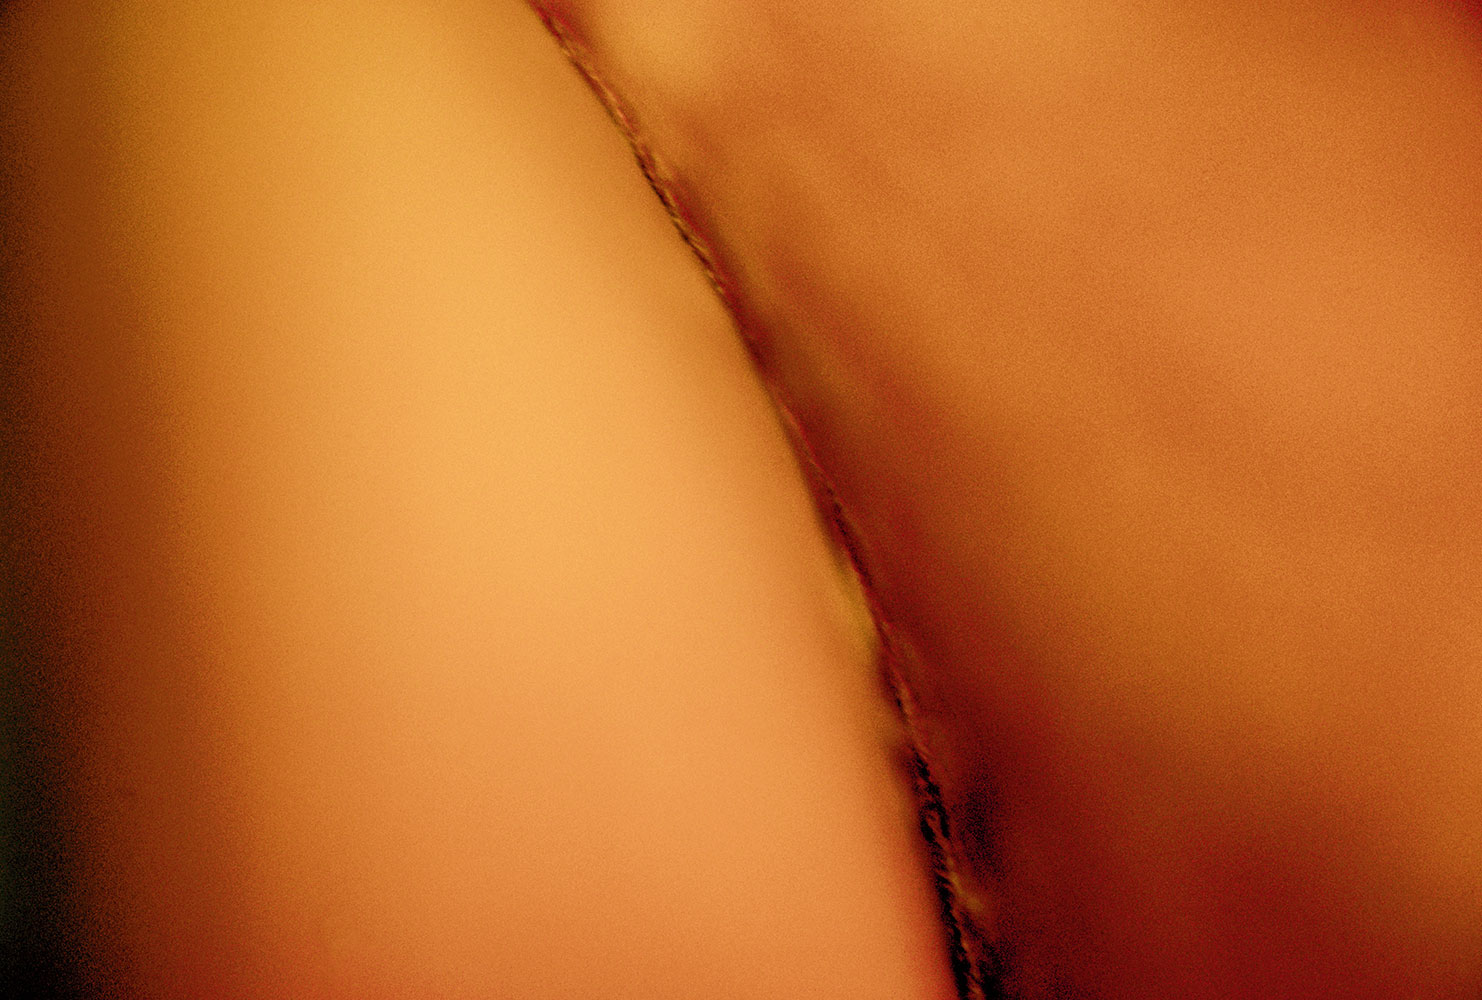 bronze:   sepia   nude   desert    wildflower   skin  suggestive abstract